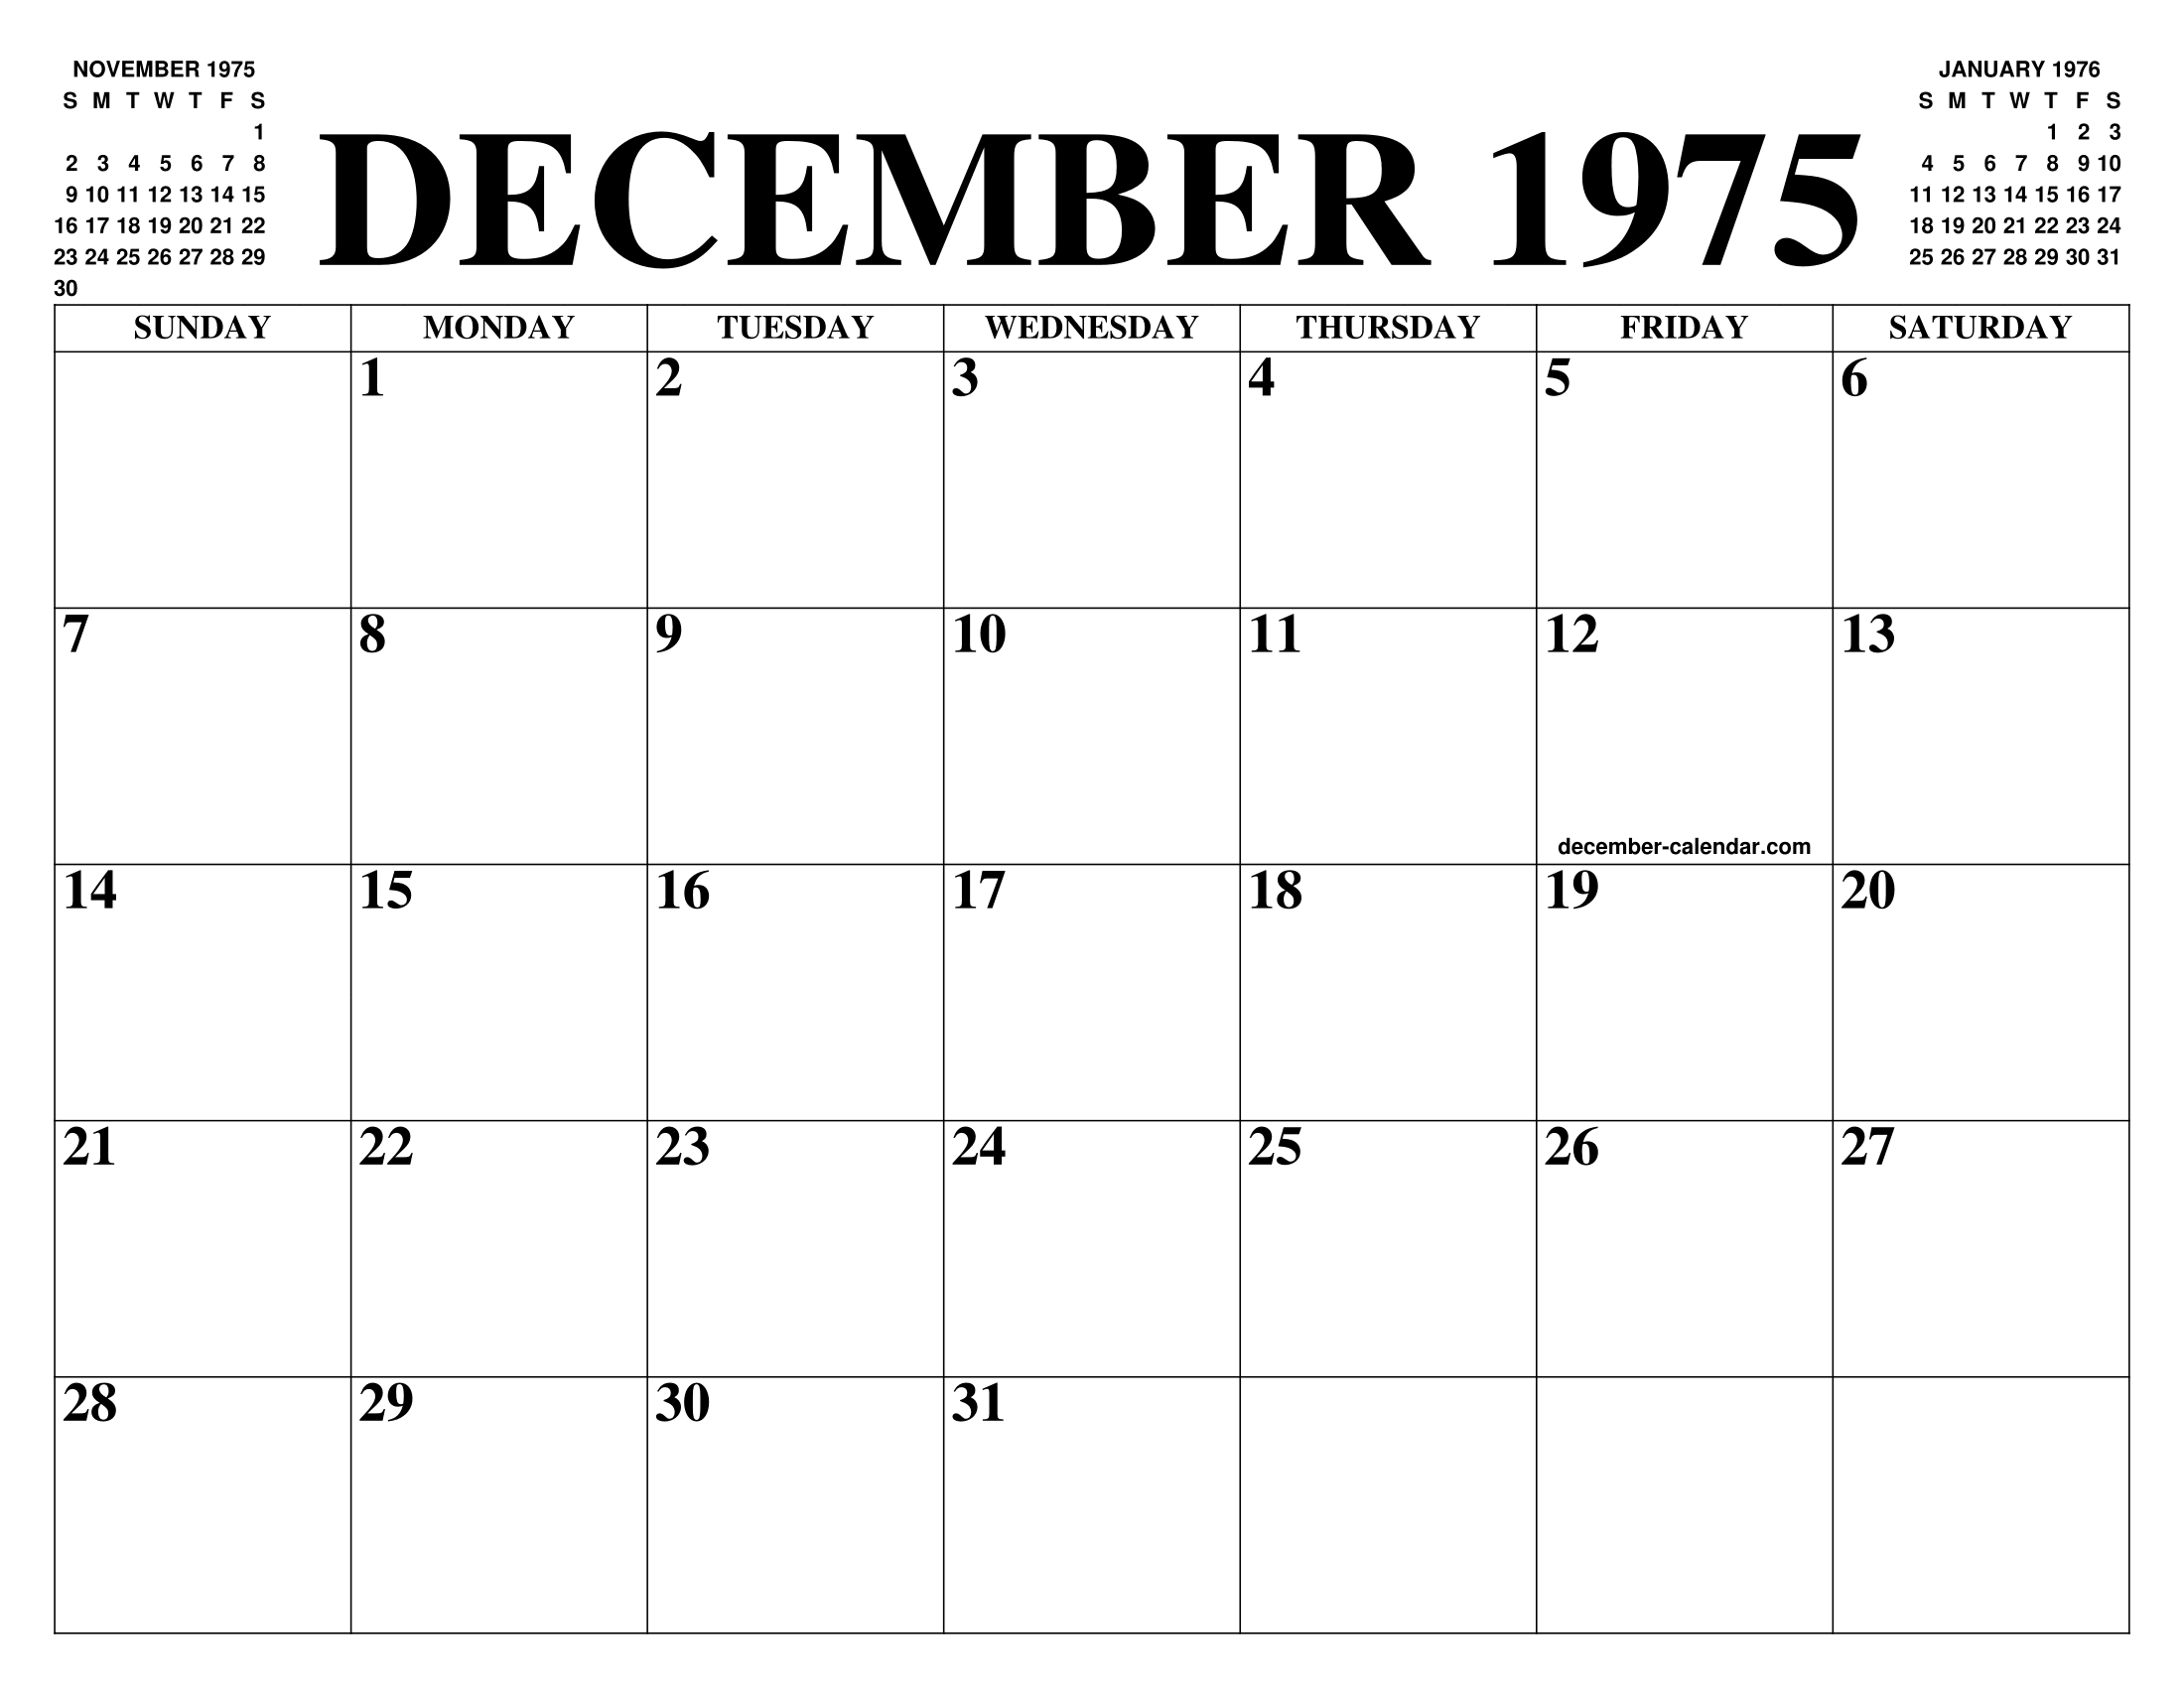 DECEMBER 1975 CALENDAR OF THE MONTH: FREE PRINTABLE DECEMBER CALENDAR